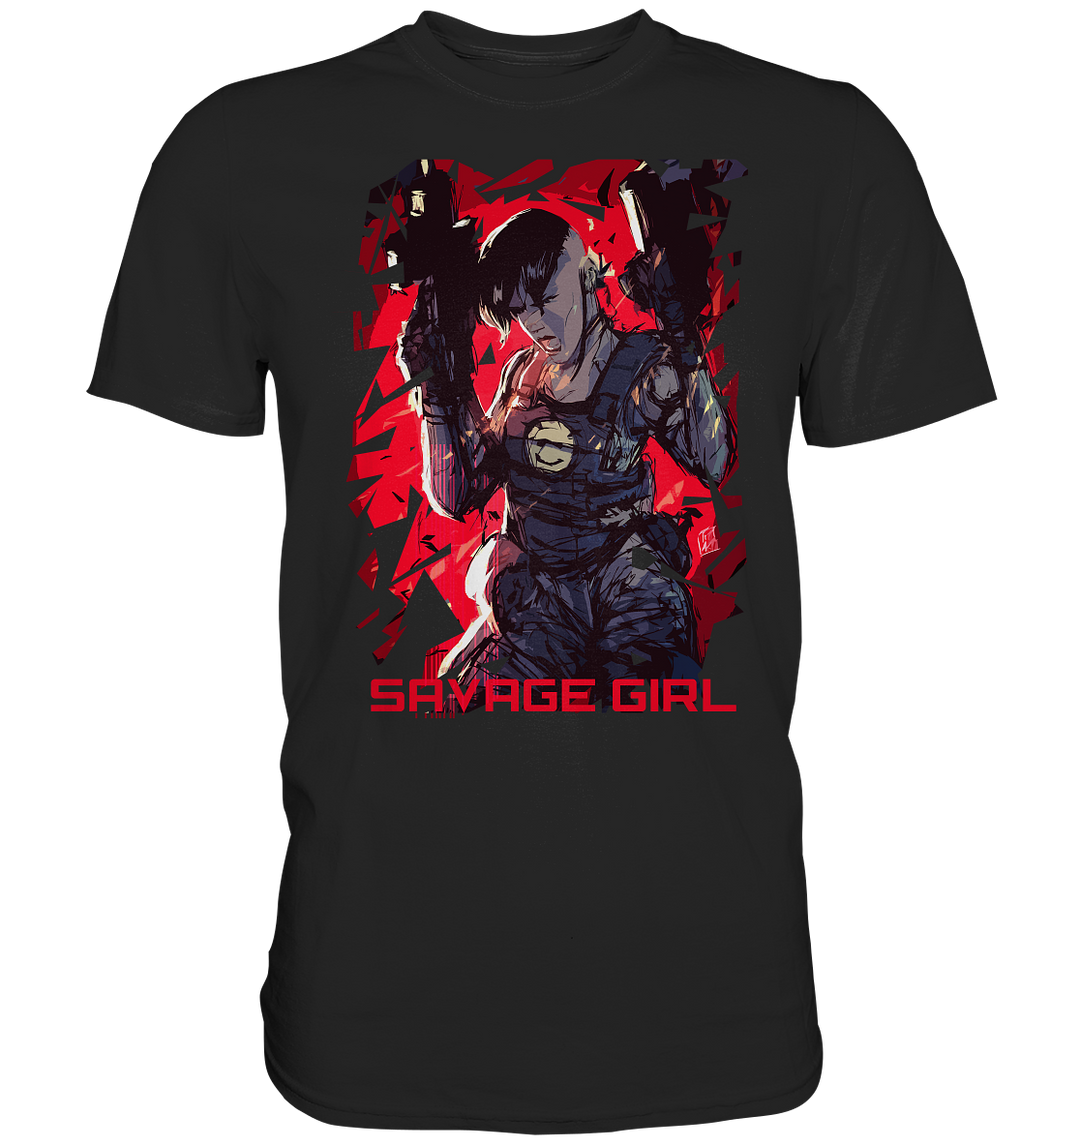 "Savage Girl" - Premium Shirt